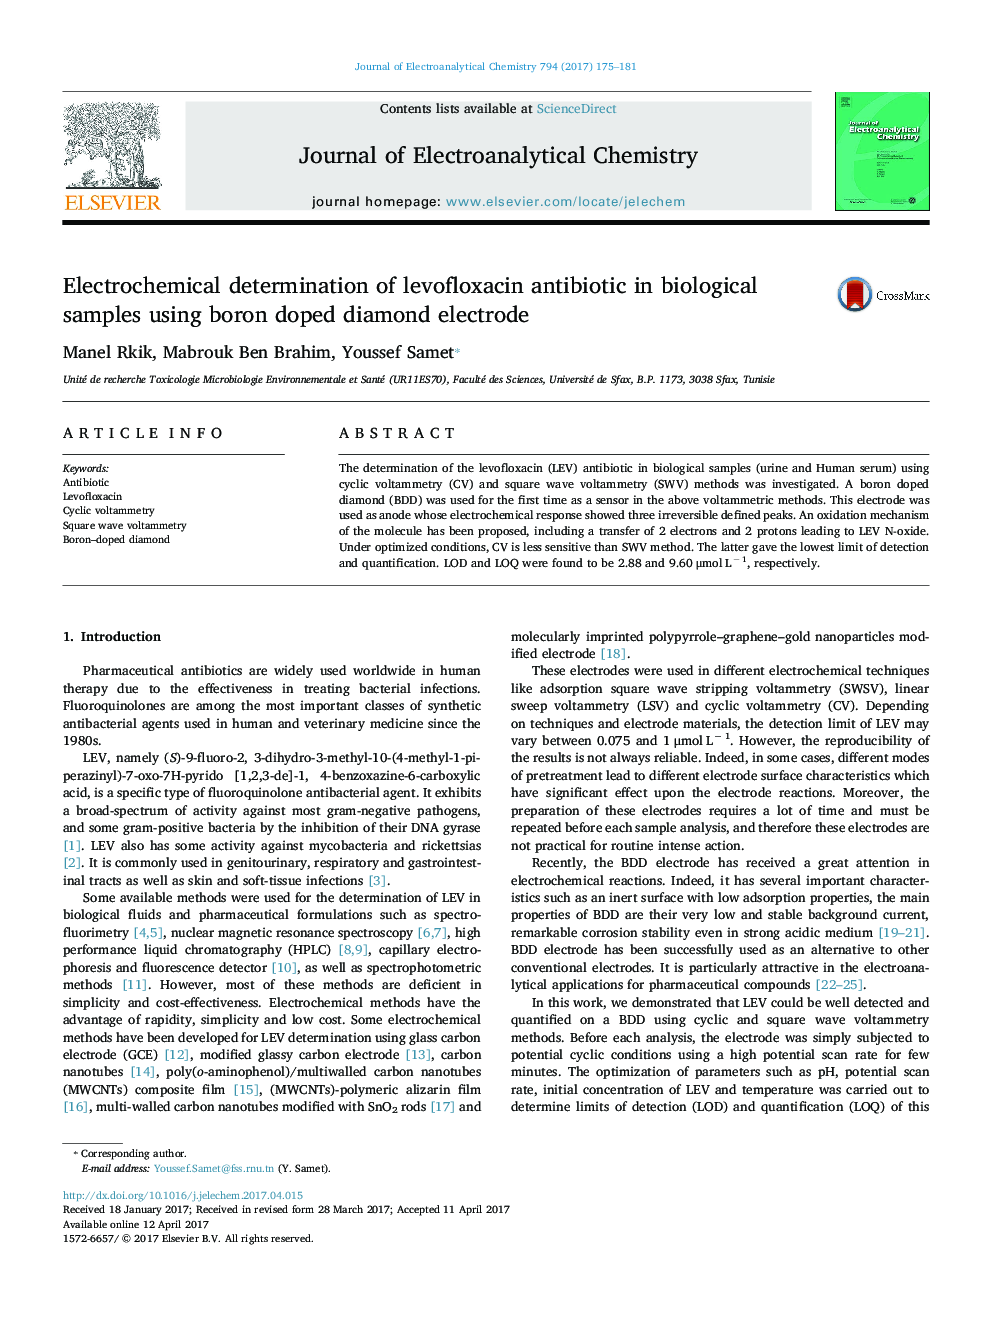 Electrochemical determination of levofloxacin antibiotic in biological samples using boron doped diamond electrode